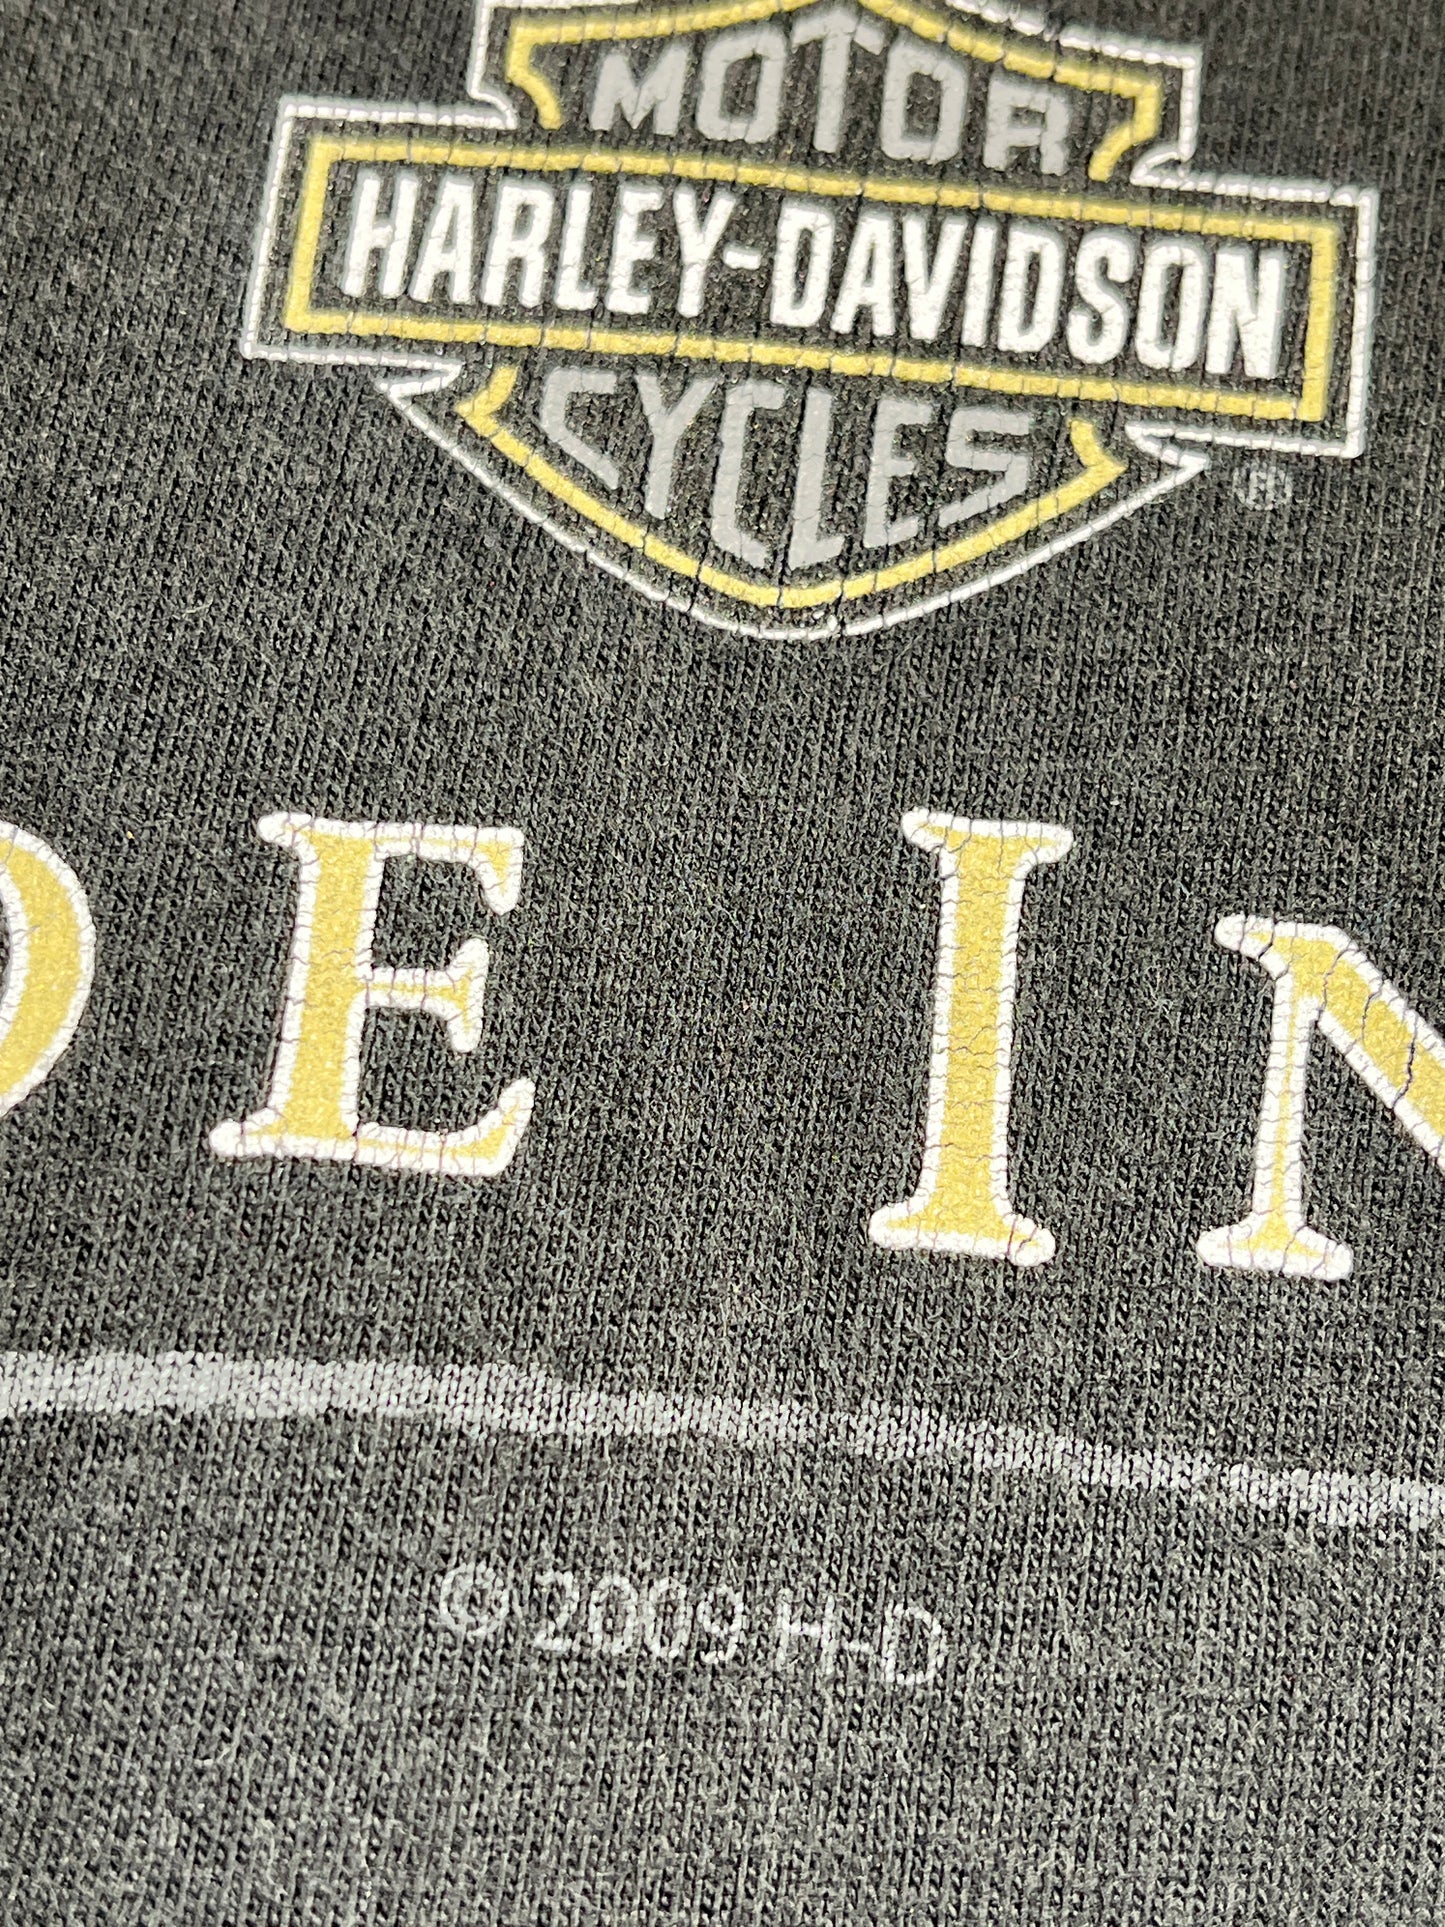 Vintage Harley Davidson T-Shirt Attitude Included